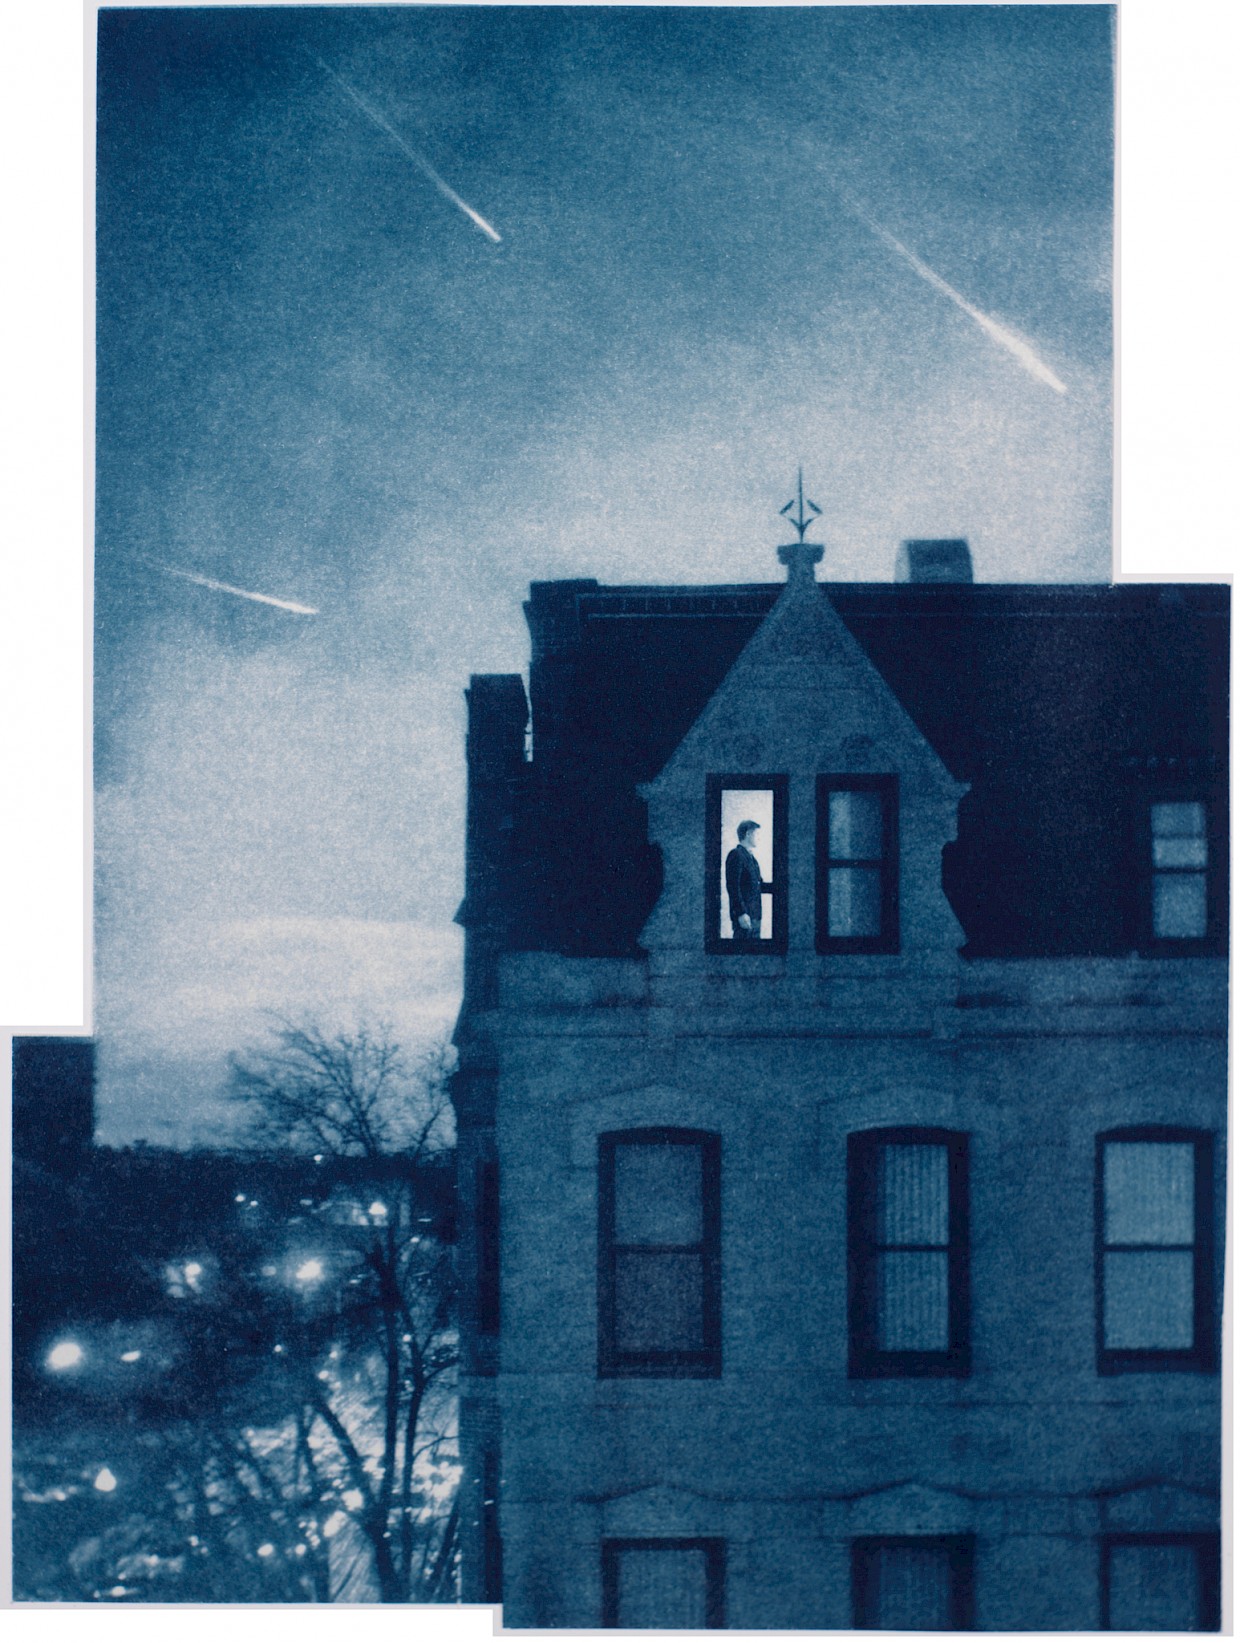 man seen through window of row house against backdrop of light streaks in evening sky